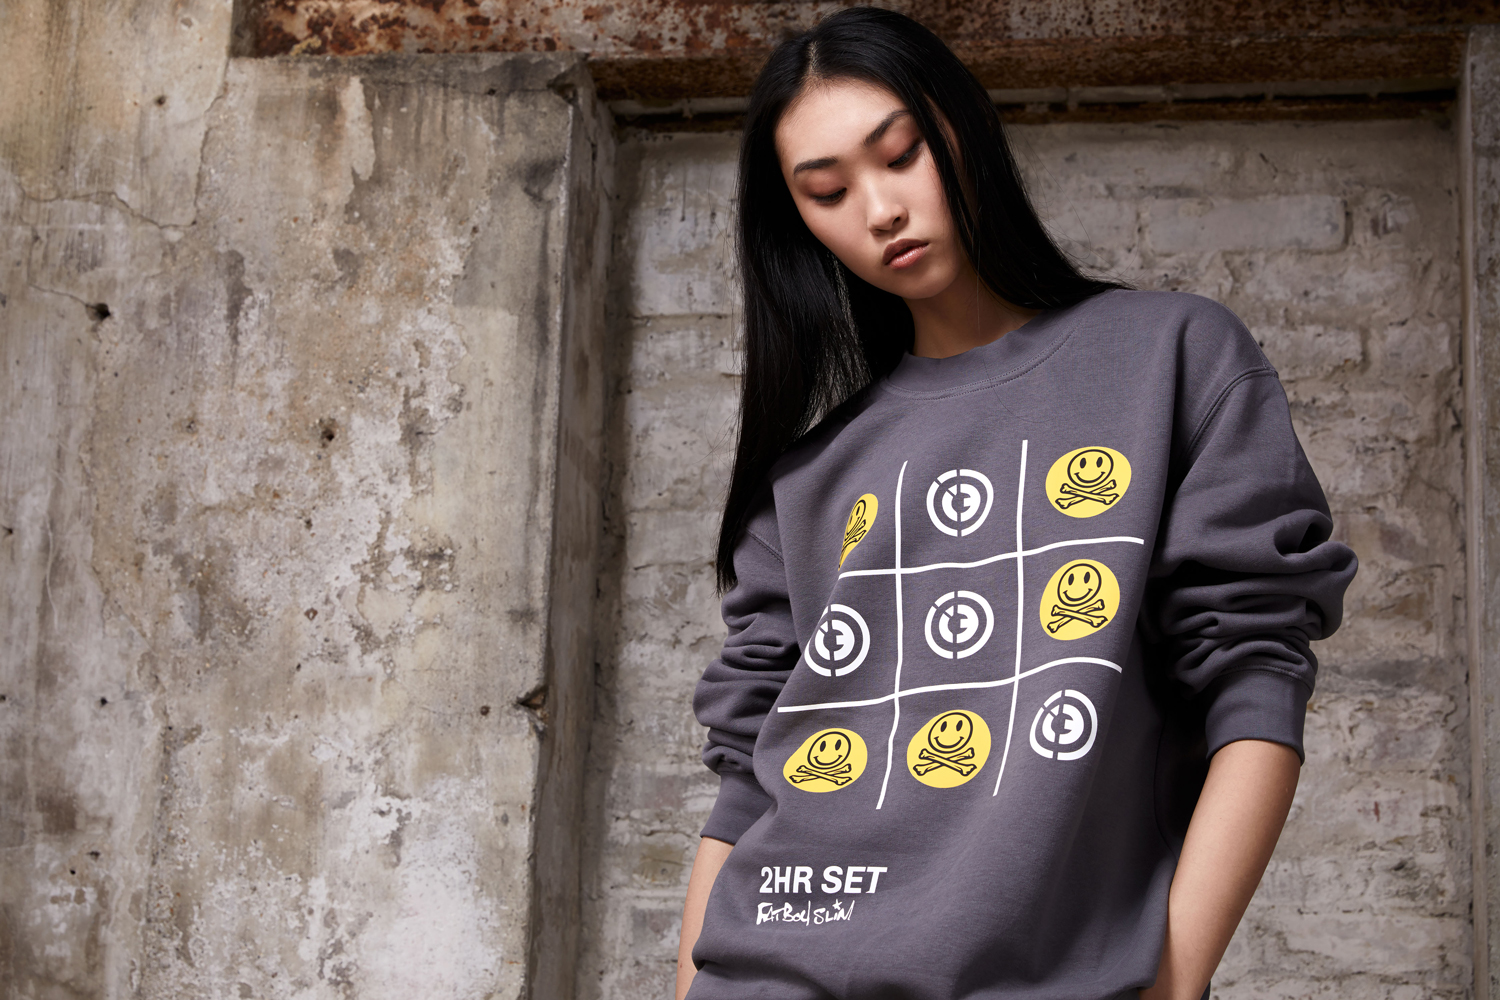 idris elba debuts new 2hr set fashion line inspired by dj culture fatboy slim x sweatshirt grey